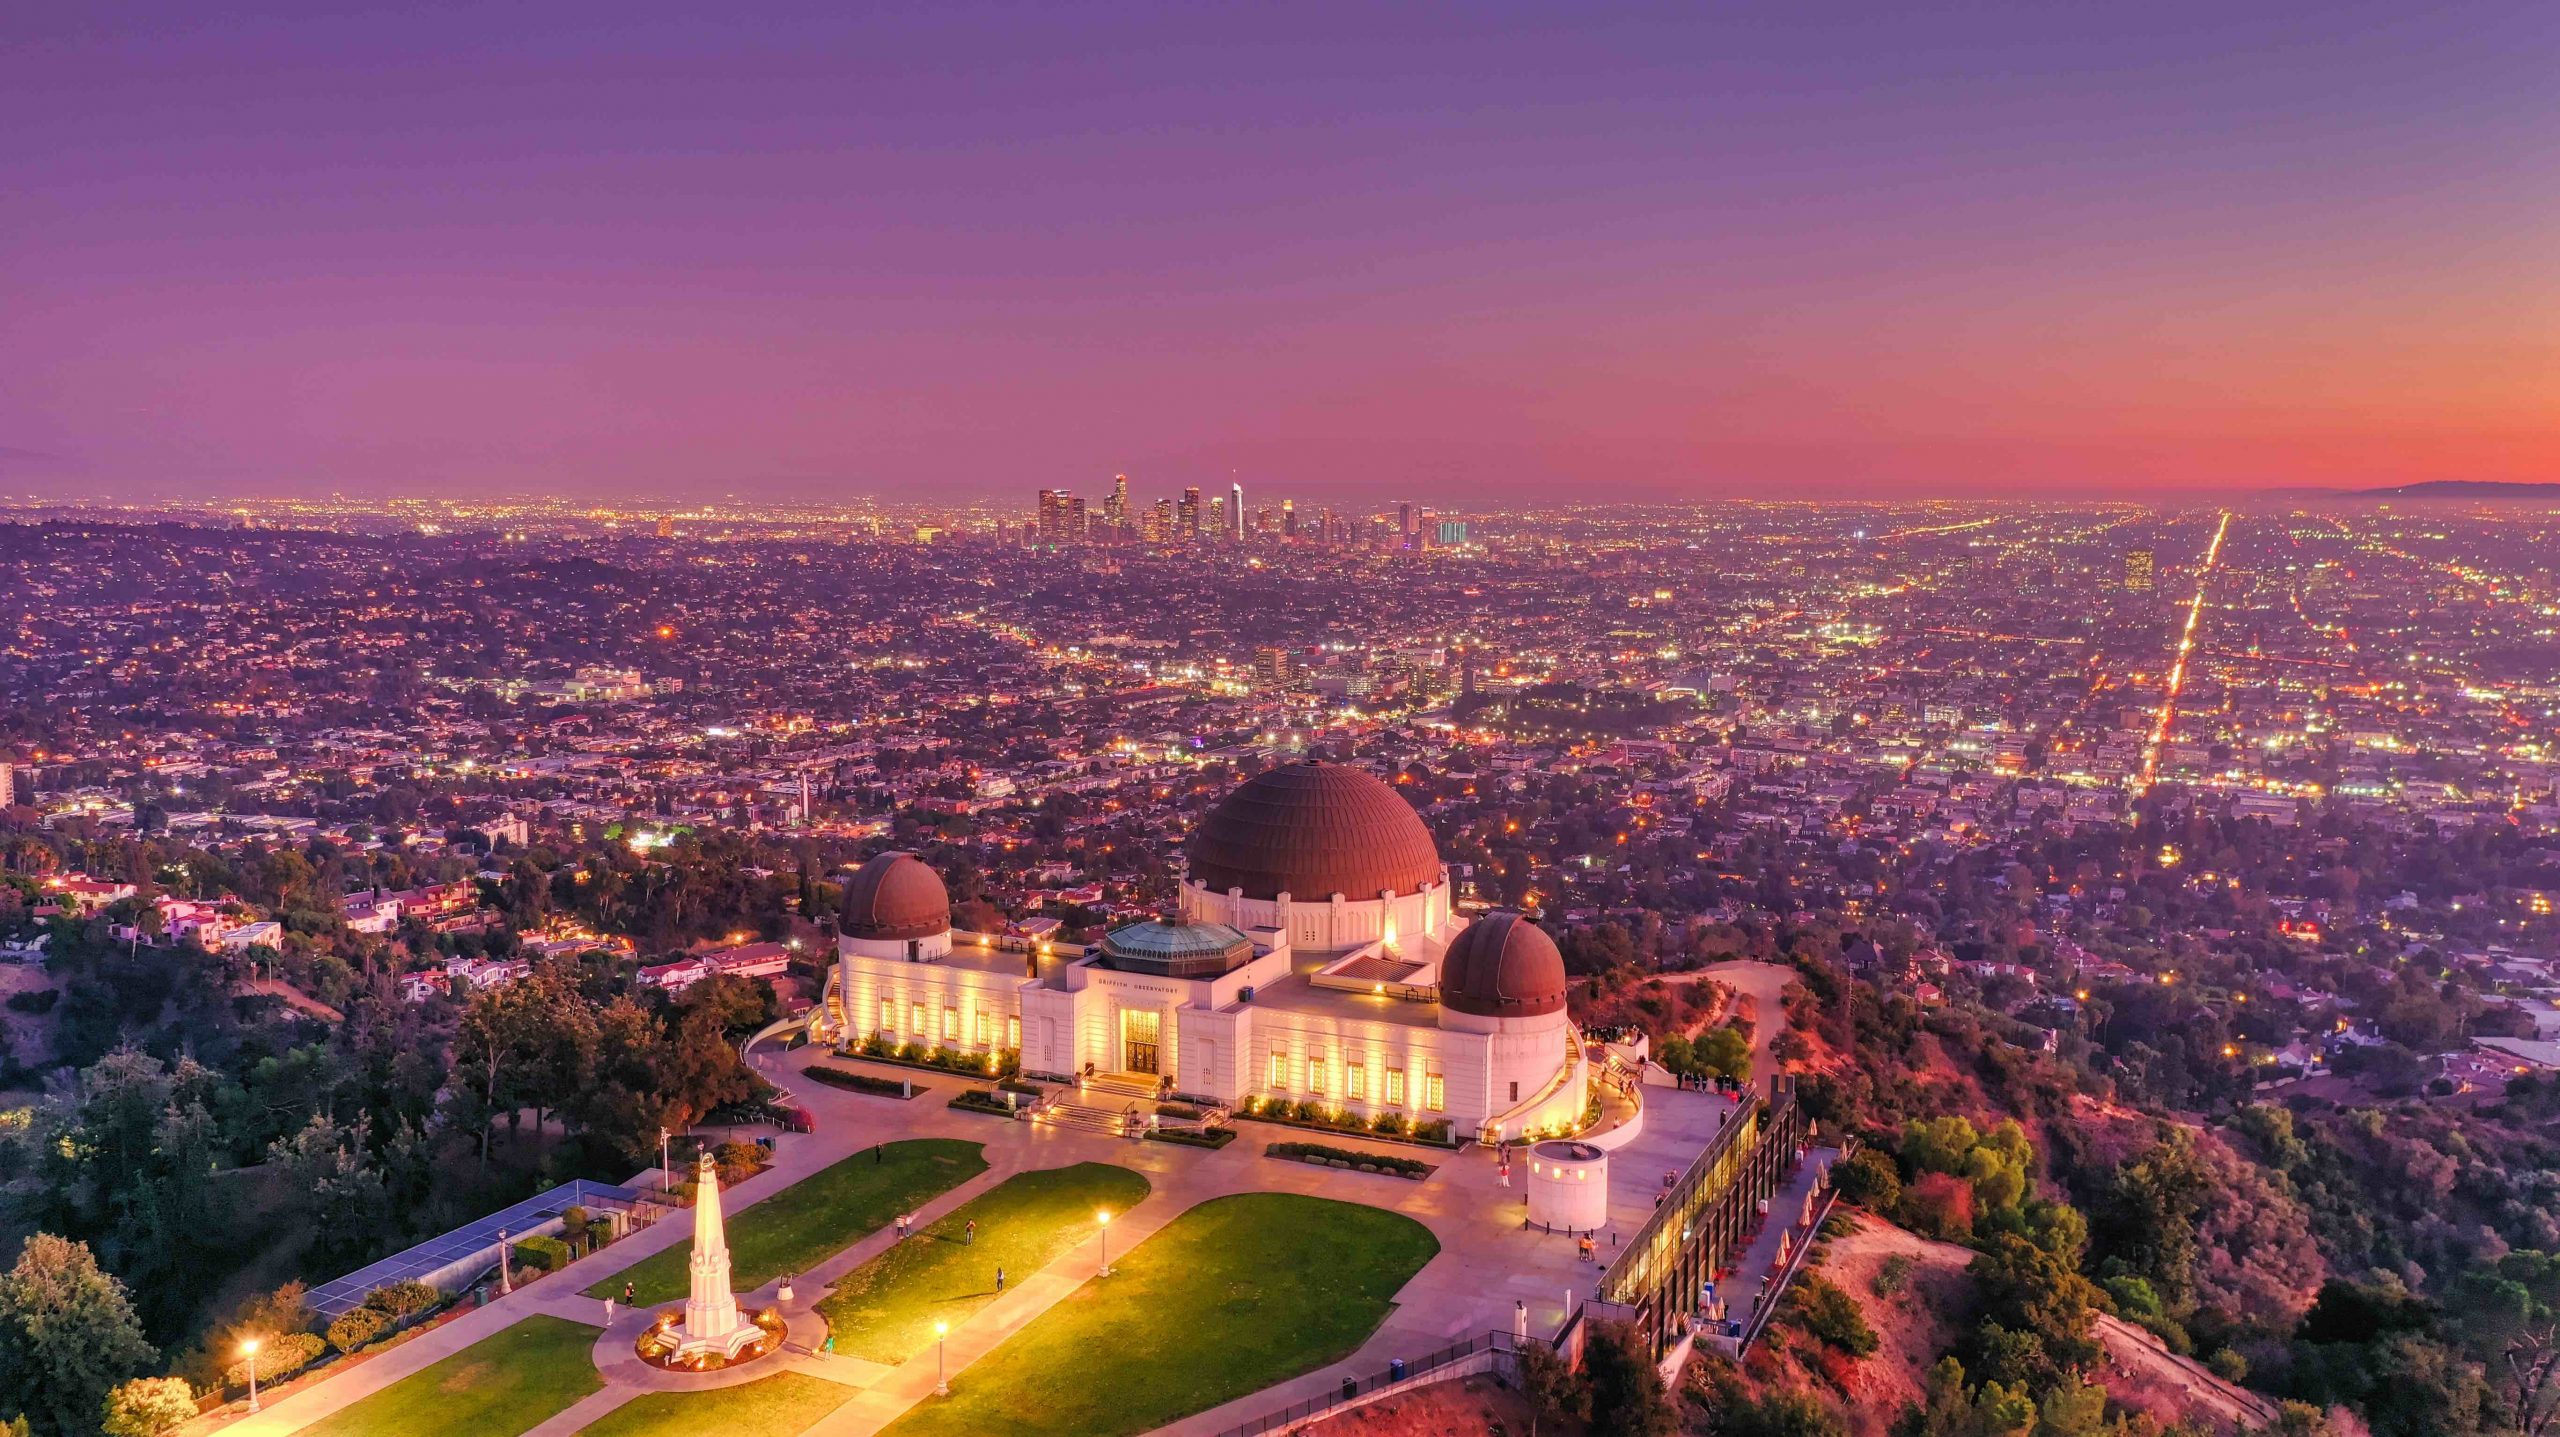 5 Best Los Angeles Famous Places To Visit - Los Angeles